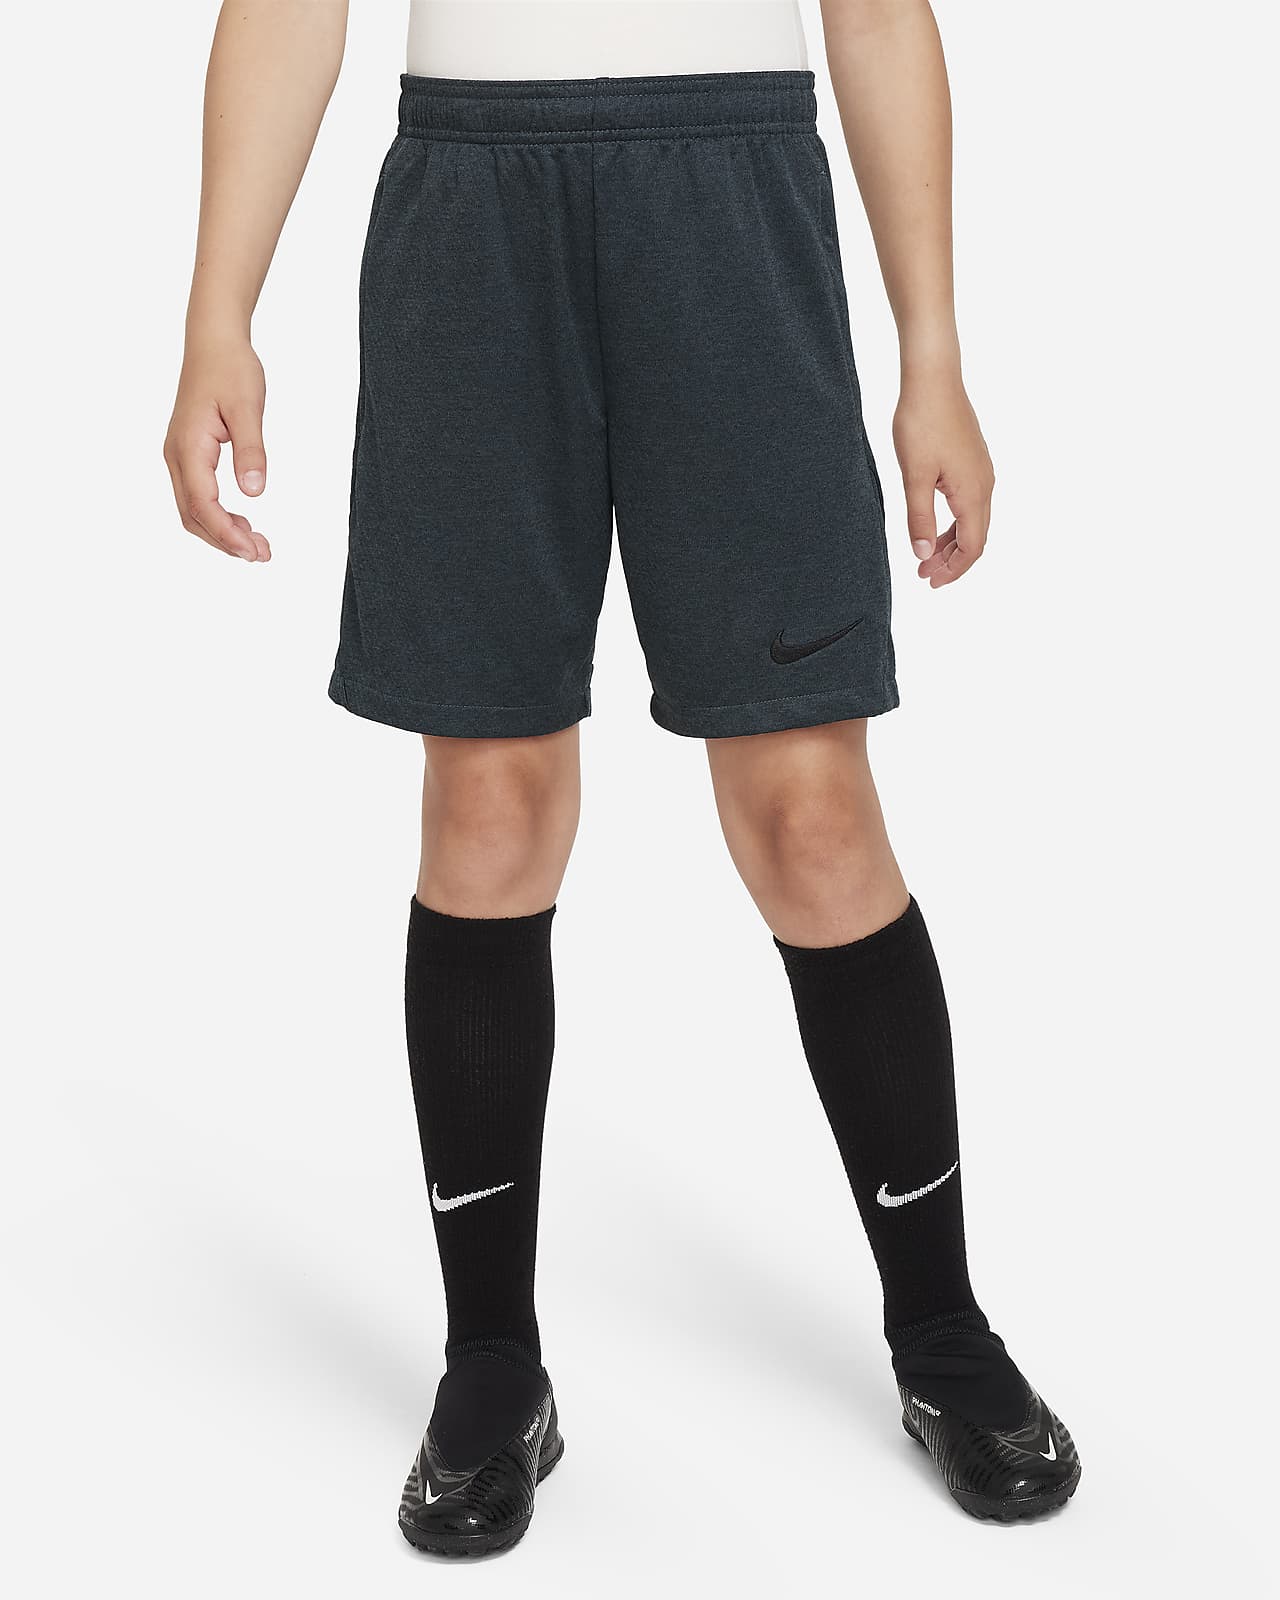 Kids\' Big Shorts. Academy Nike Dri-FIT Soccer